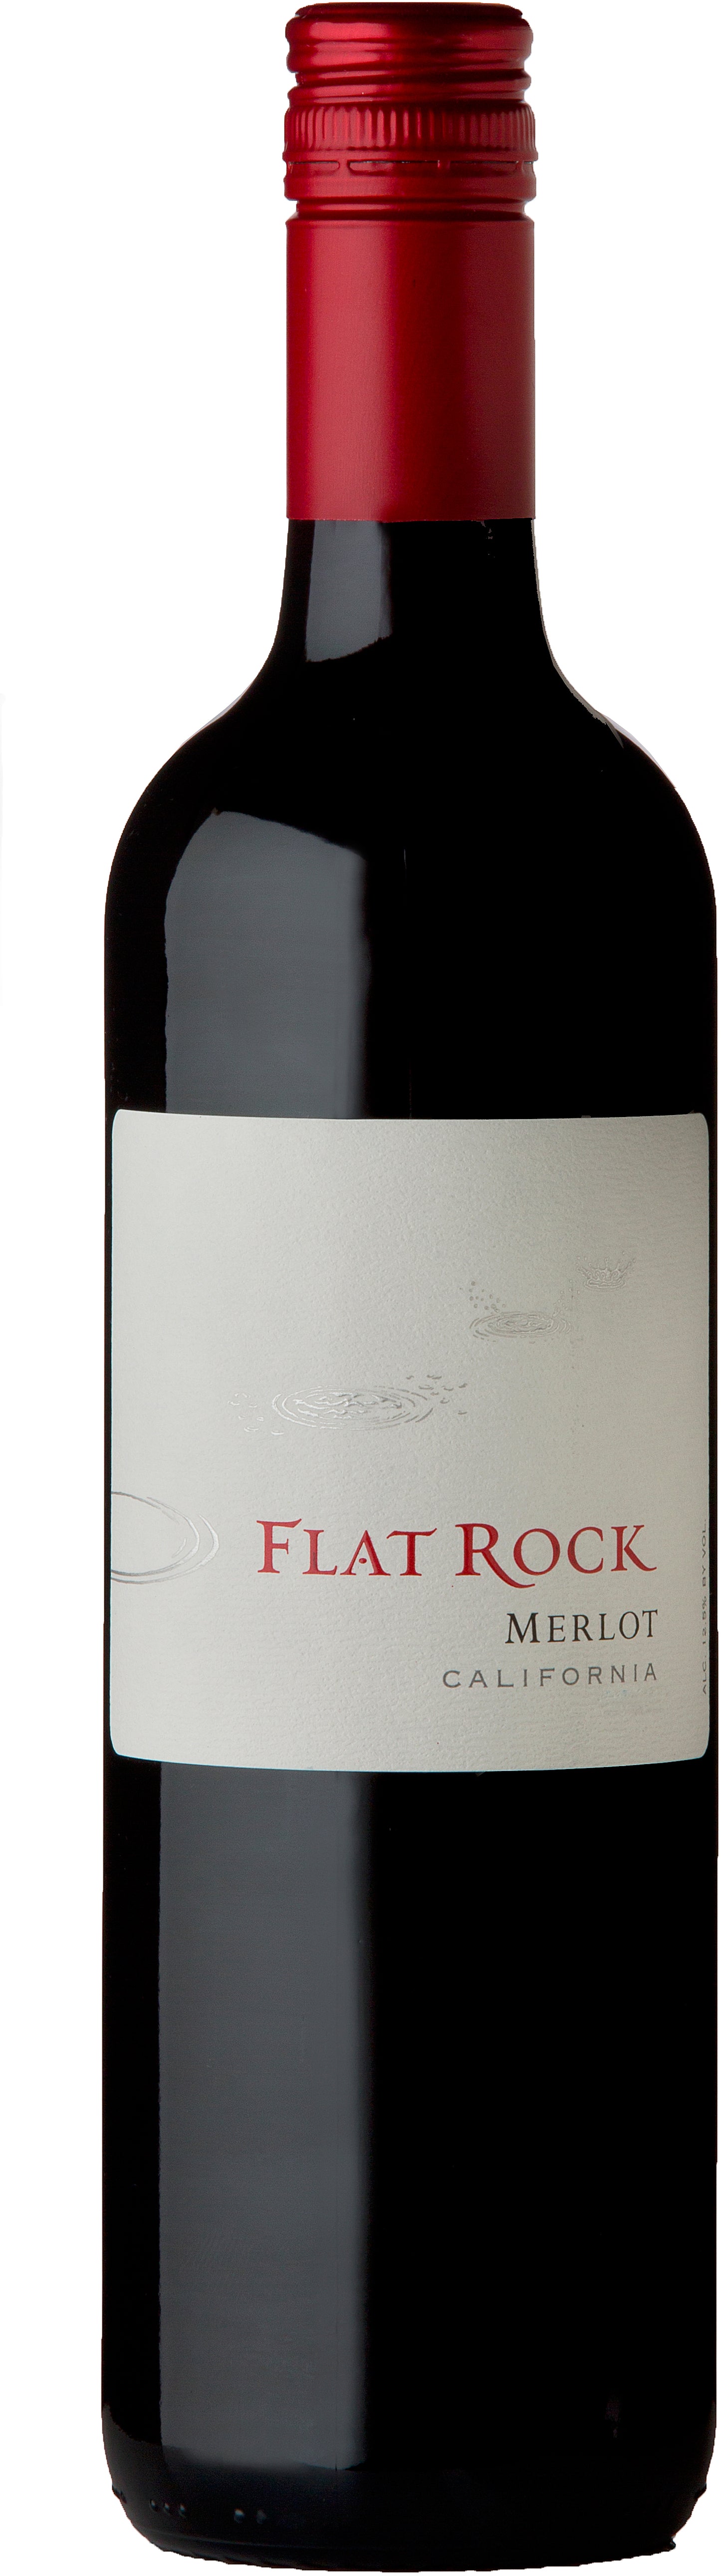 Flat Rock Merlot 2016